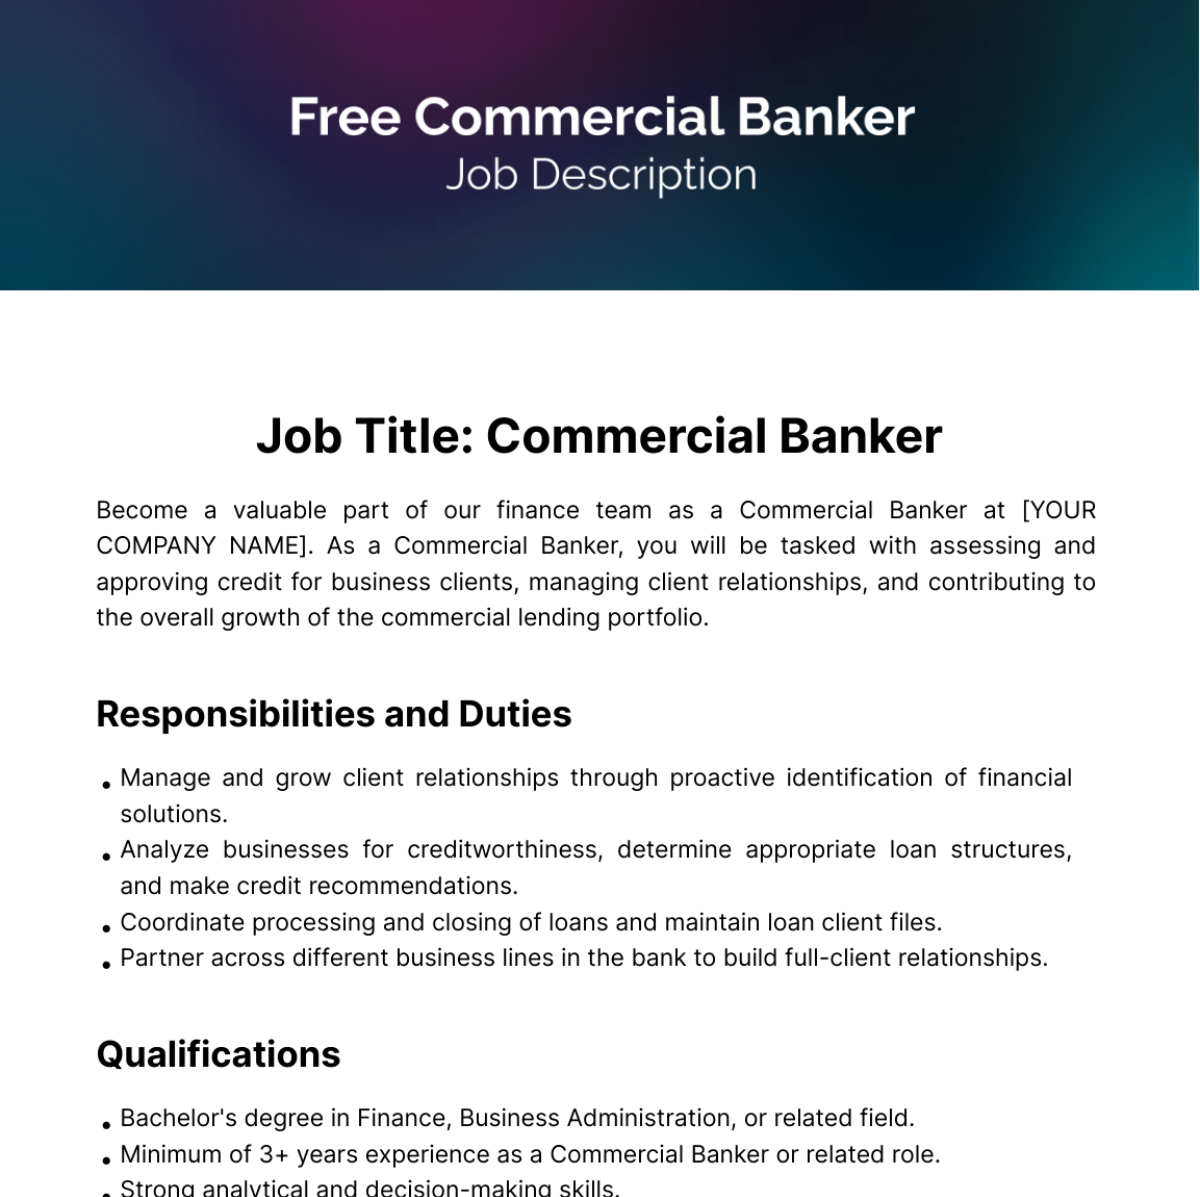 Free Commercial Banker Job Description Template